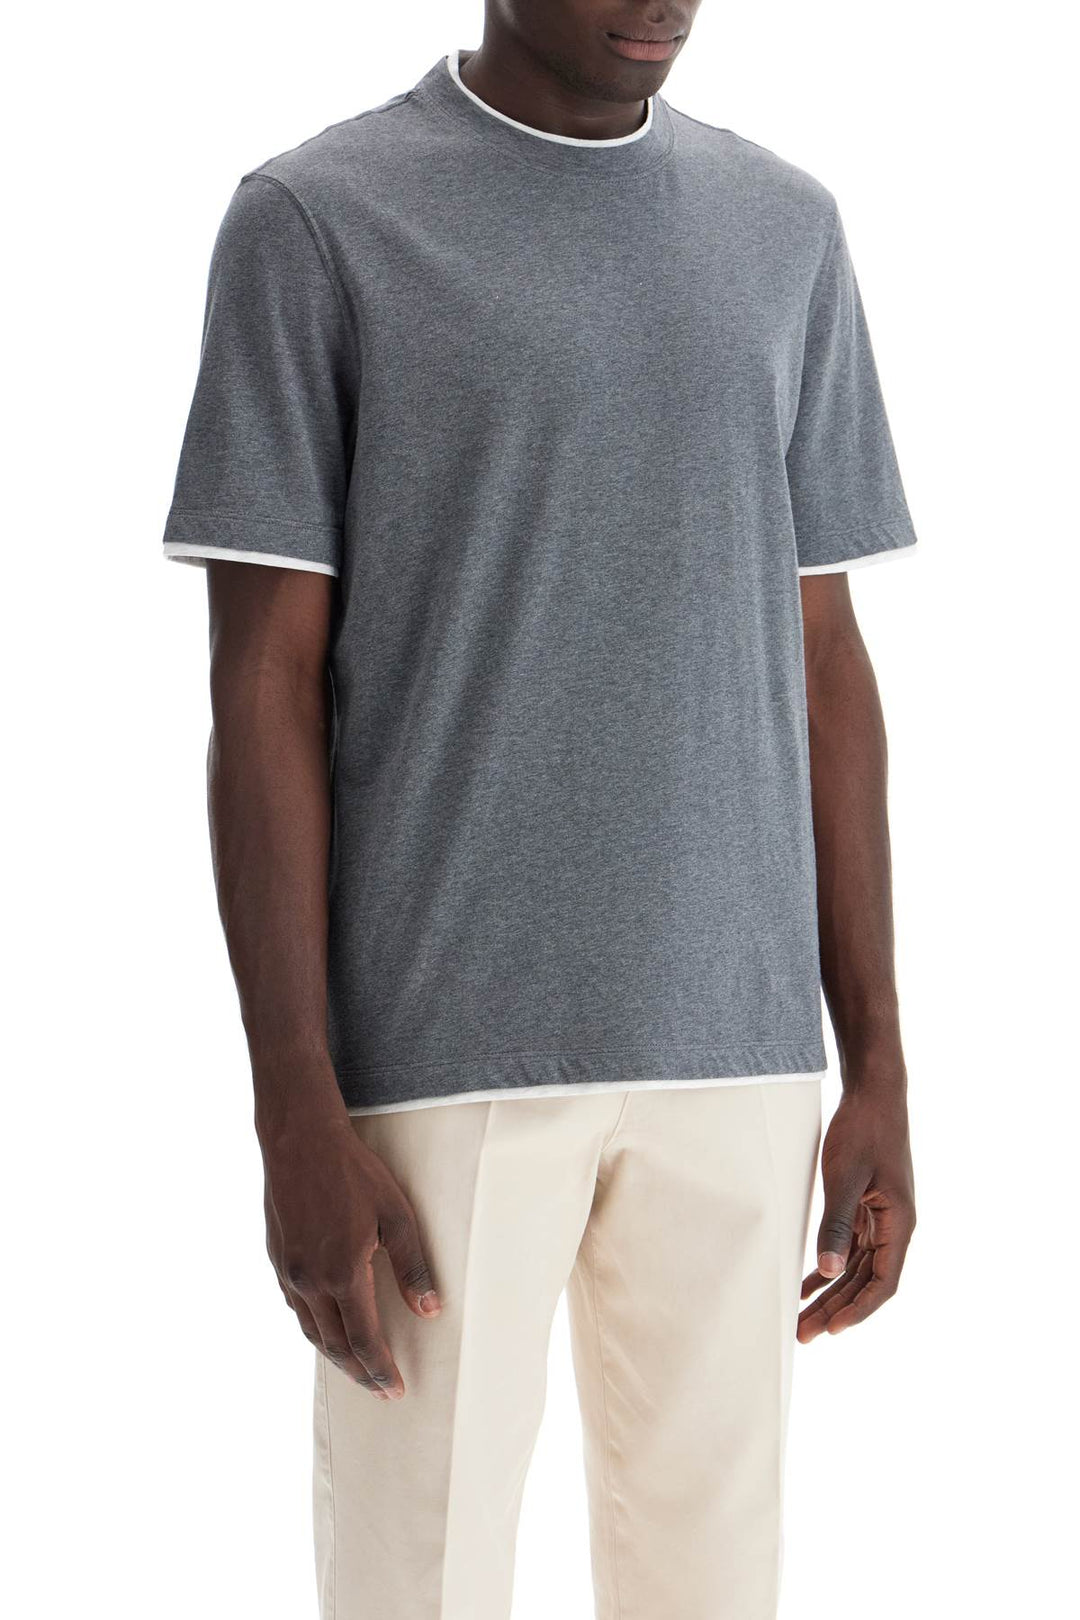 Brunello Cucinelli Layered Effect T Shirt   Grey